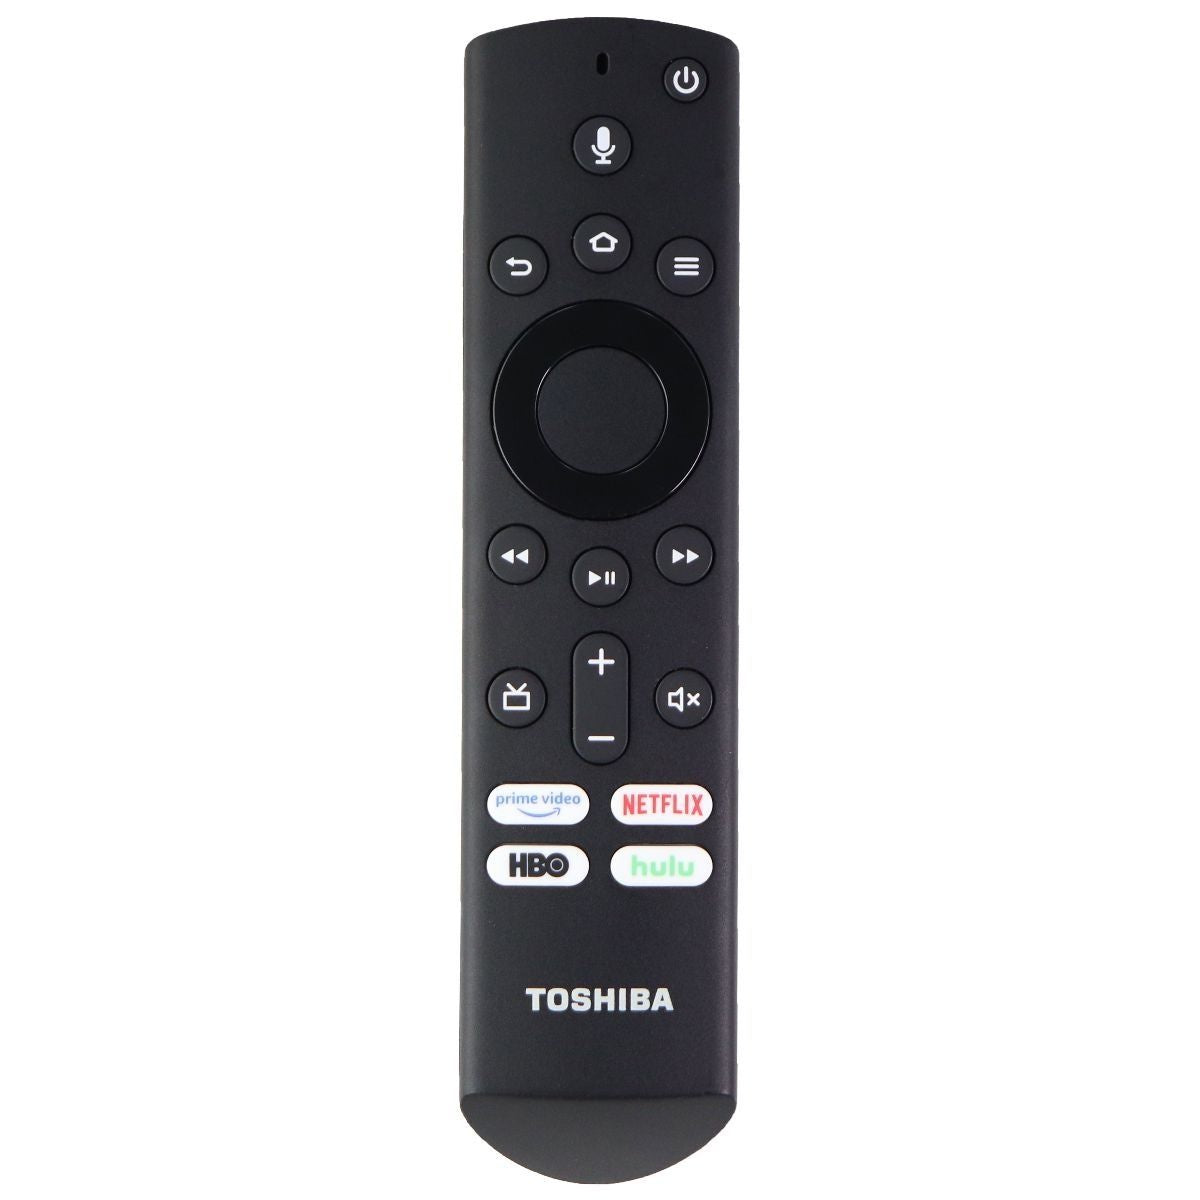 Toshiba Remote Control (CT-RC1US-19 Rev B) for Select Toshiba Smart TVs - Black TV, Video & Audio Accessories - Remote Controls Toshiba    - Simple Cell Bulk Wholesale Pricing - USA Seller